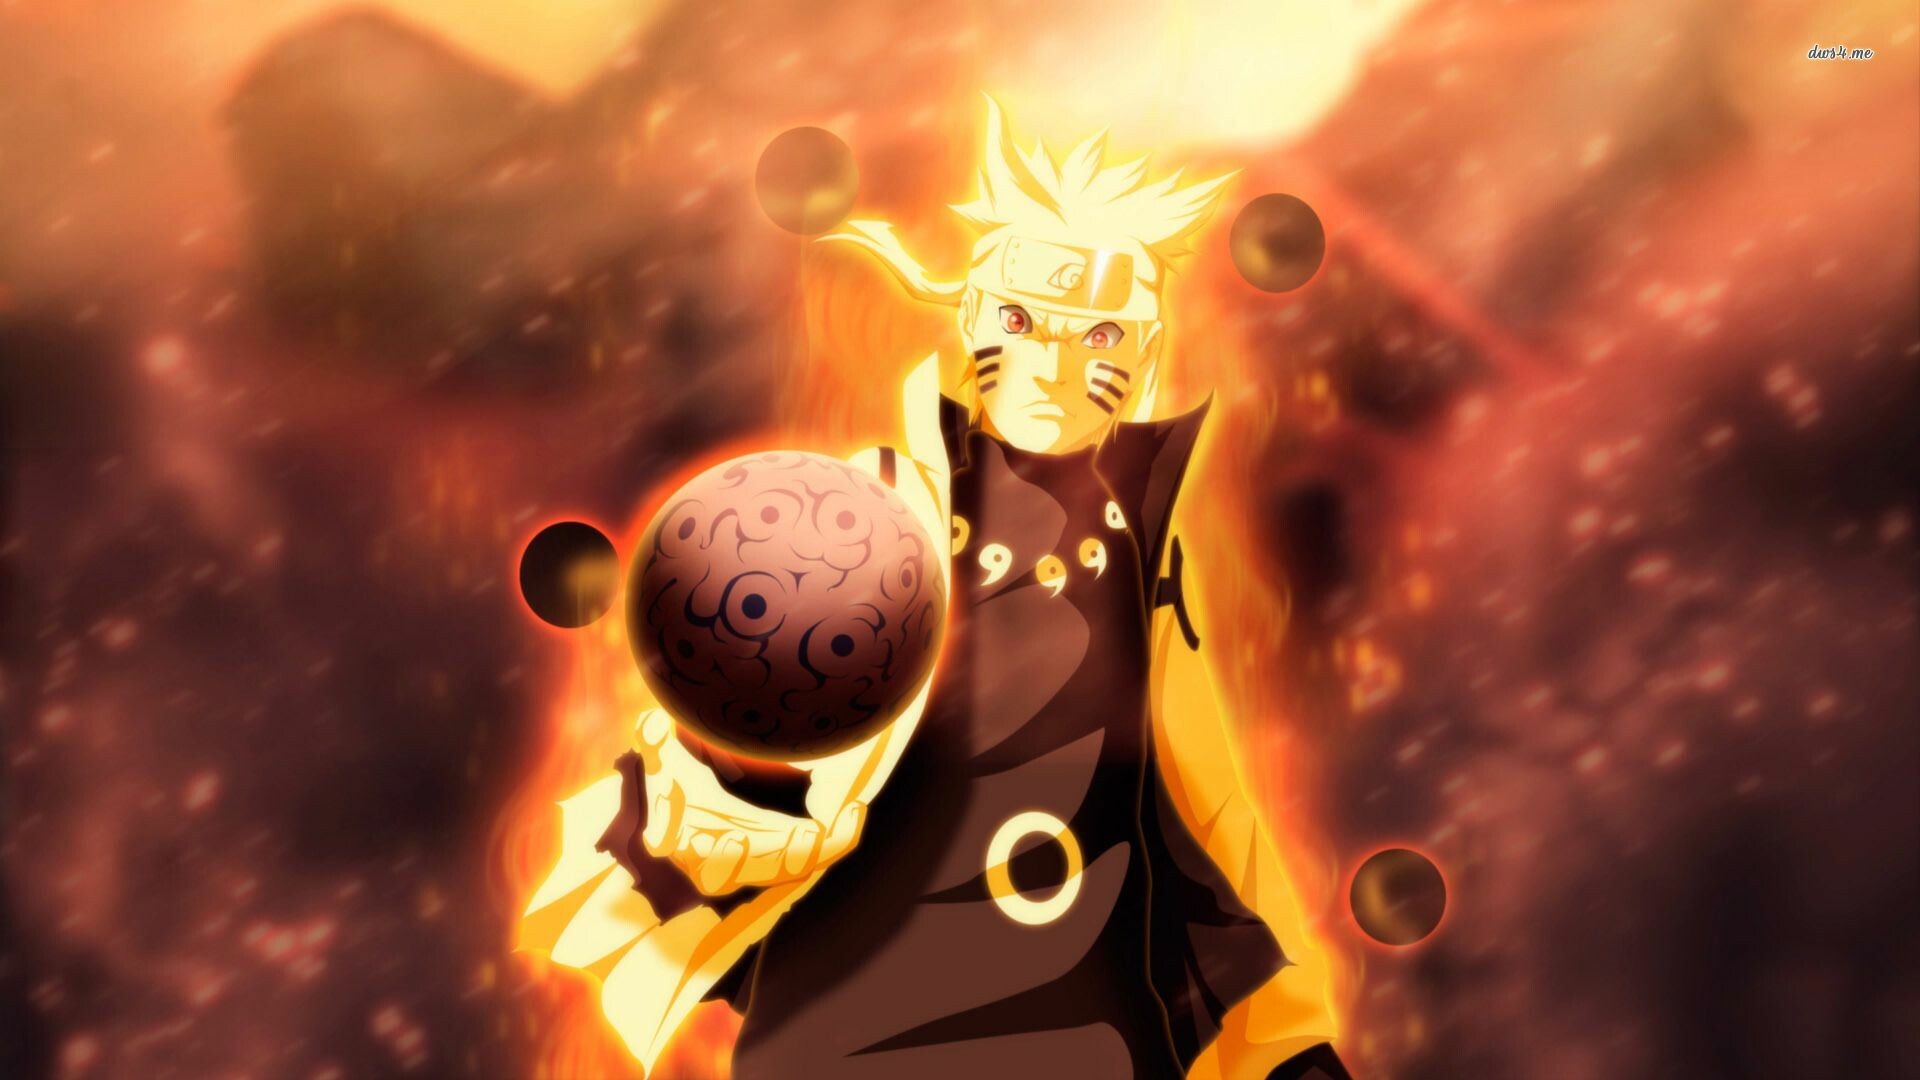 Naruto 4K Wallpapers - Latest Naruto 4K Backgrounds - WallpaperTeg